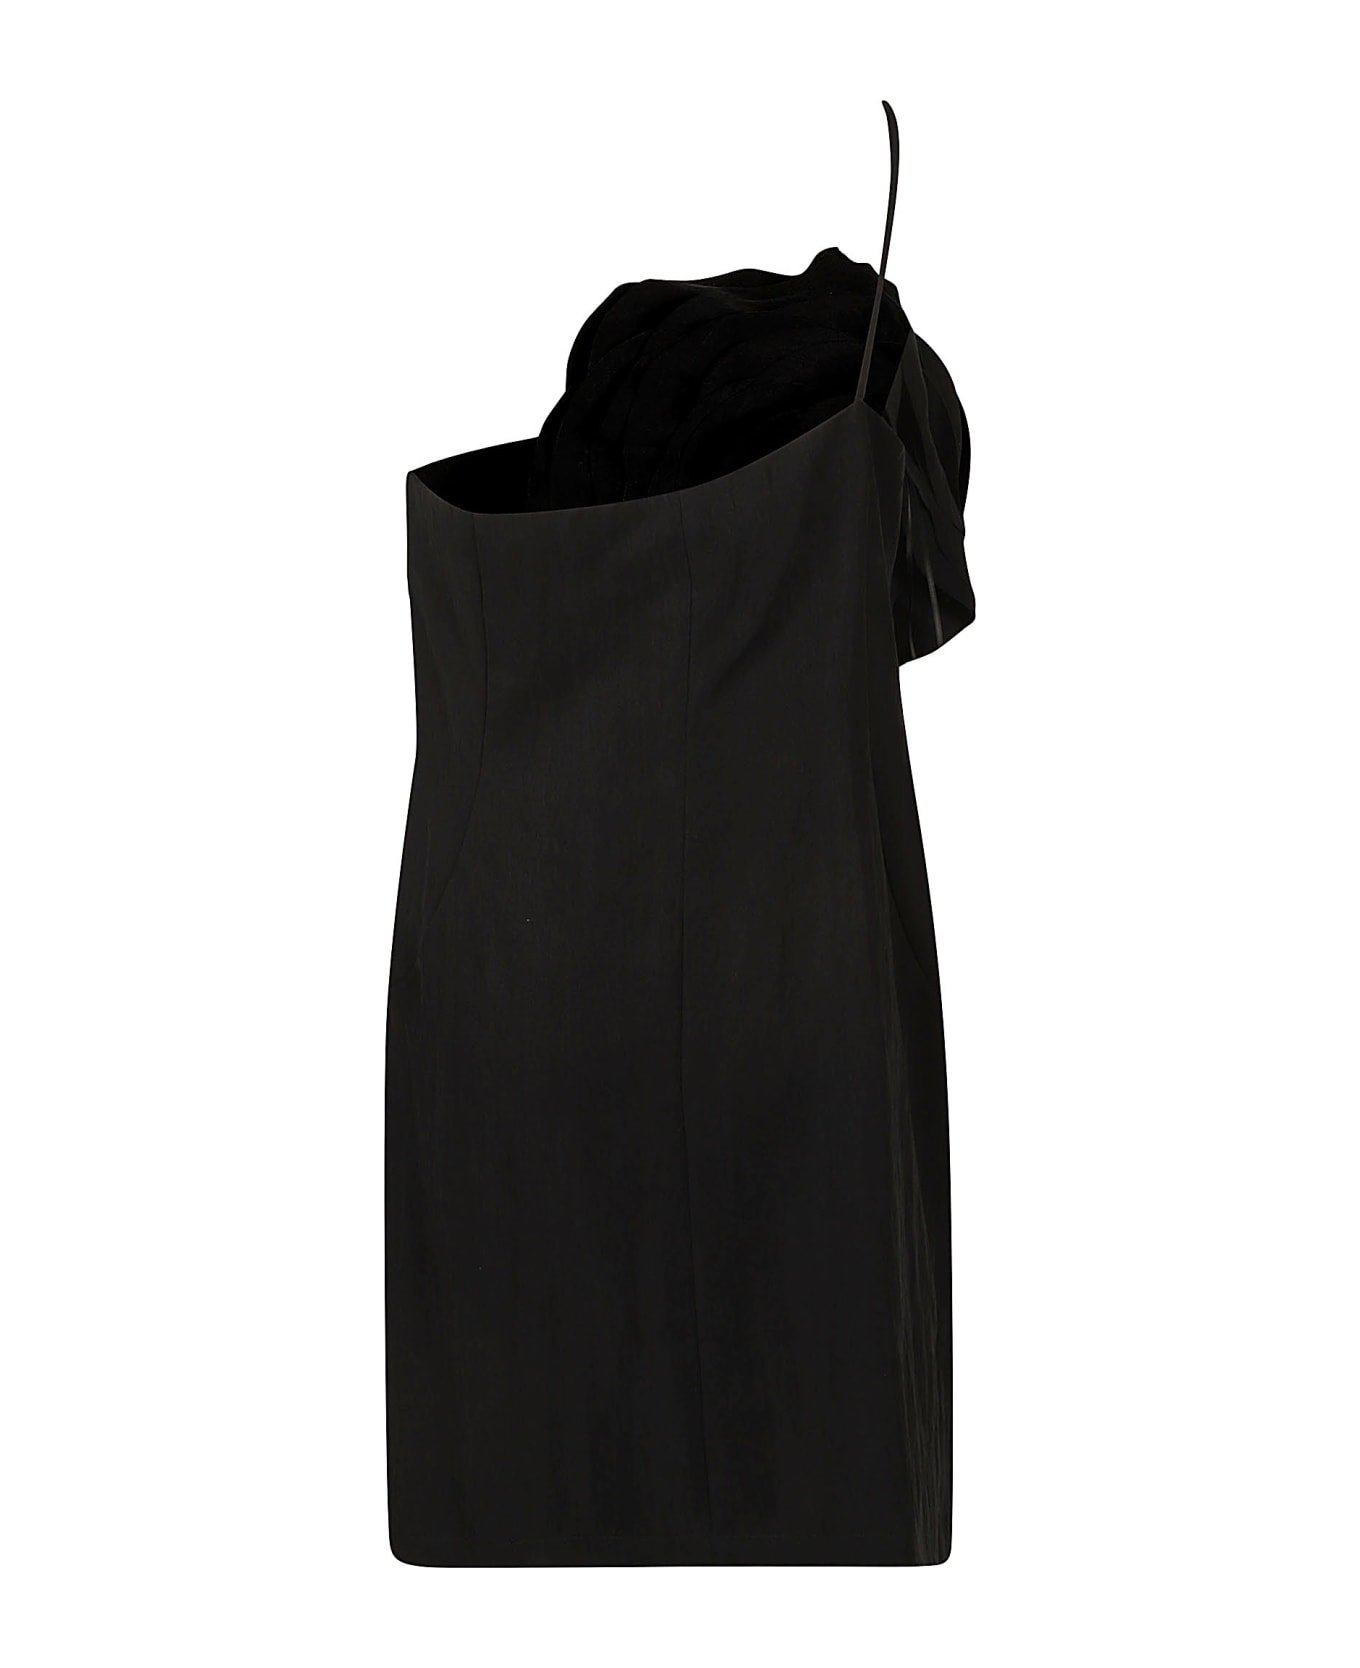 Blumarine Rose Embroidered Asymmetric Short Dress - Black